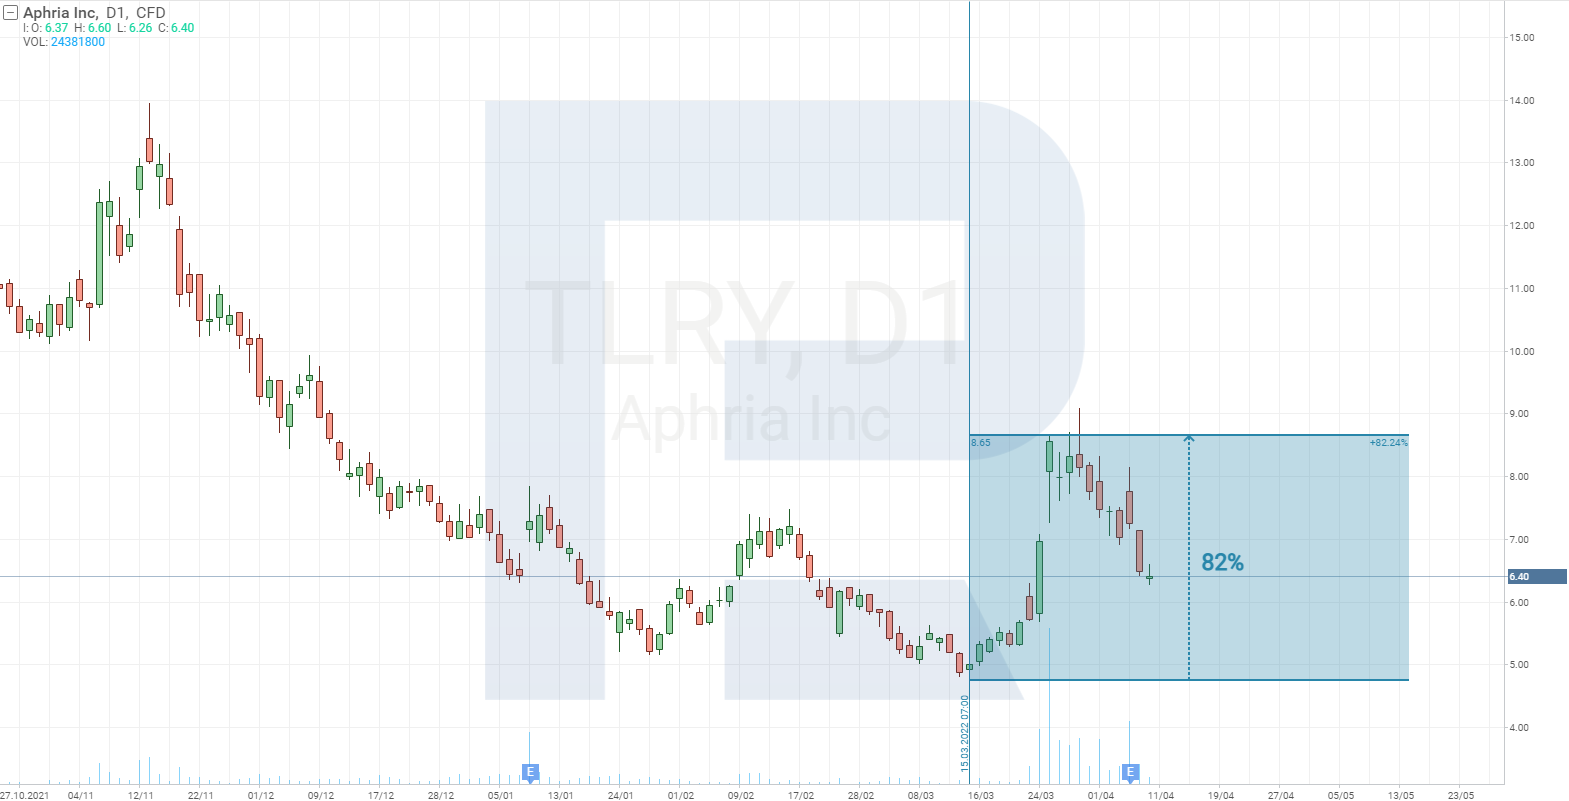 Tilray Brands share price chart